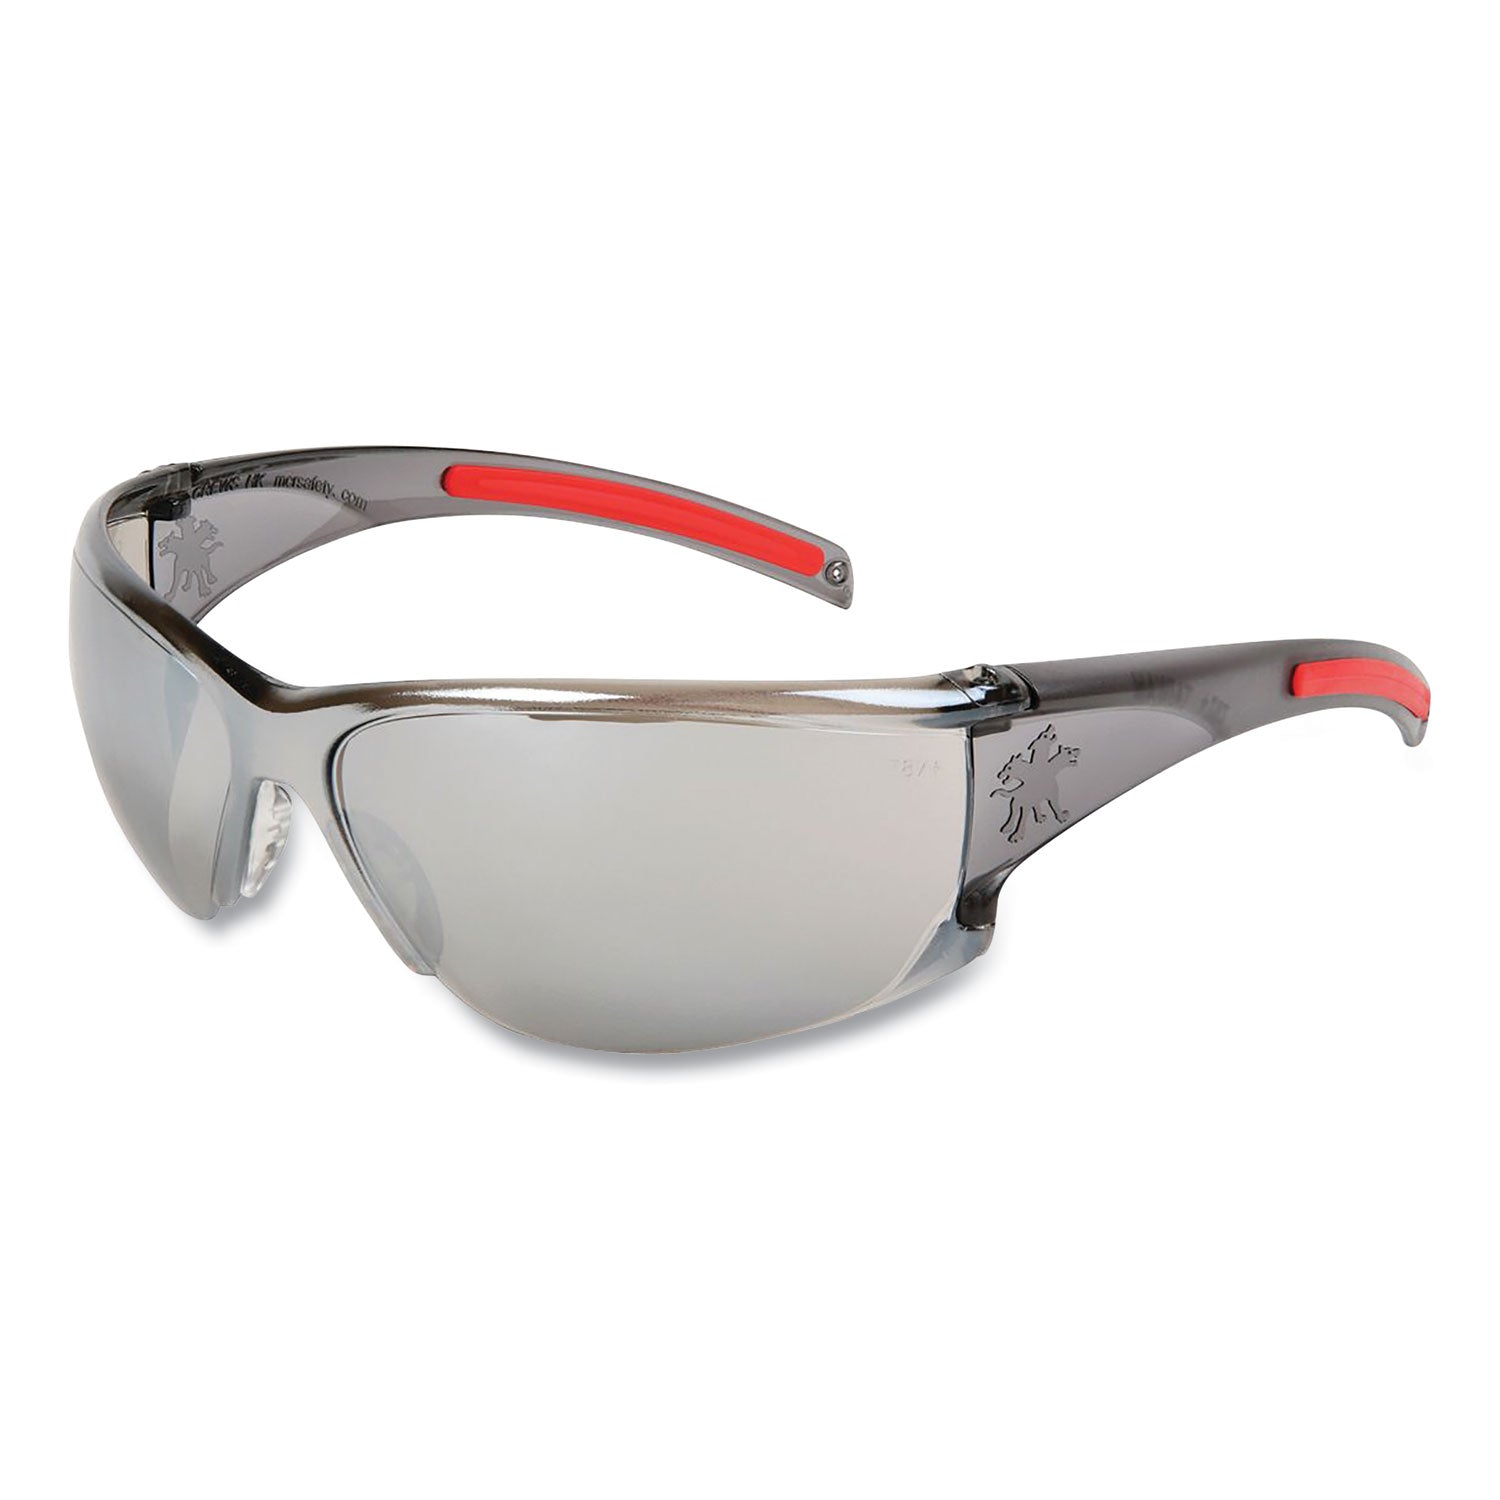 hk1-series-safety-glasses-wraparound-scratch-resistant-silver-mirror-lens-smoke-red-frame_crwhk117 - 1